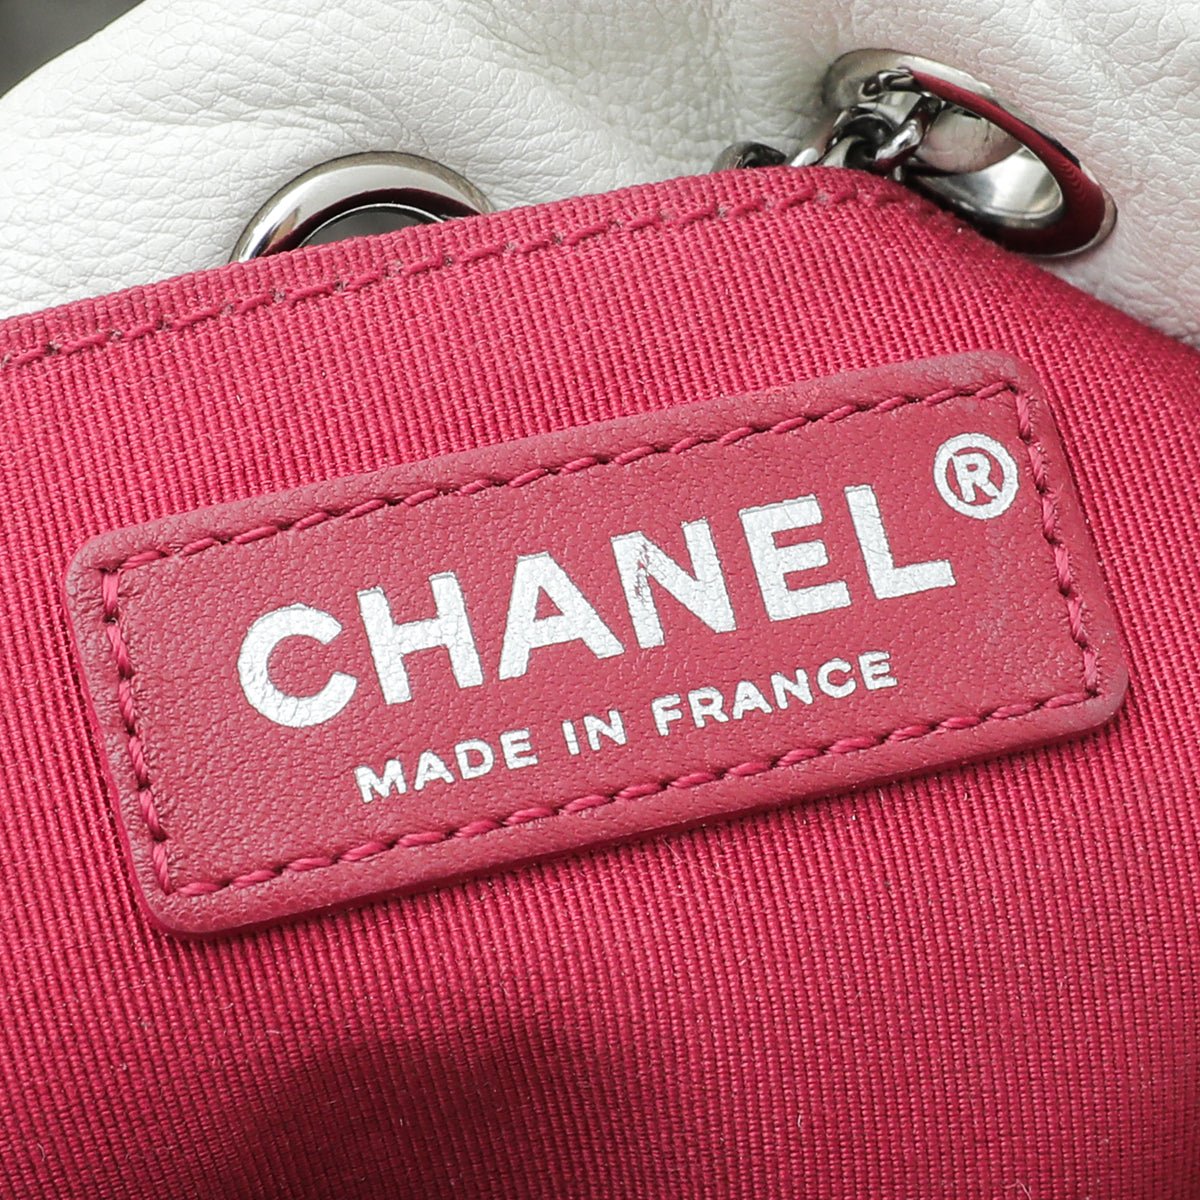 Chanel - Chanel Bicolor CC Gabrielle Small Bucket Bag | The Closet